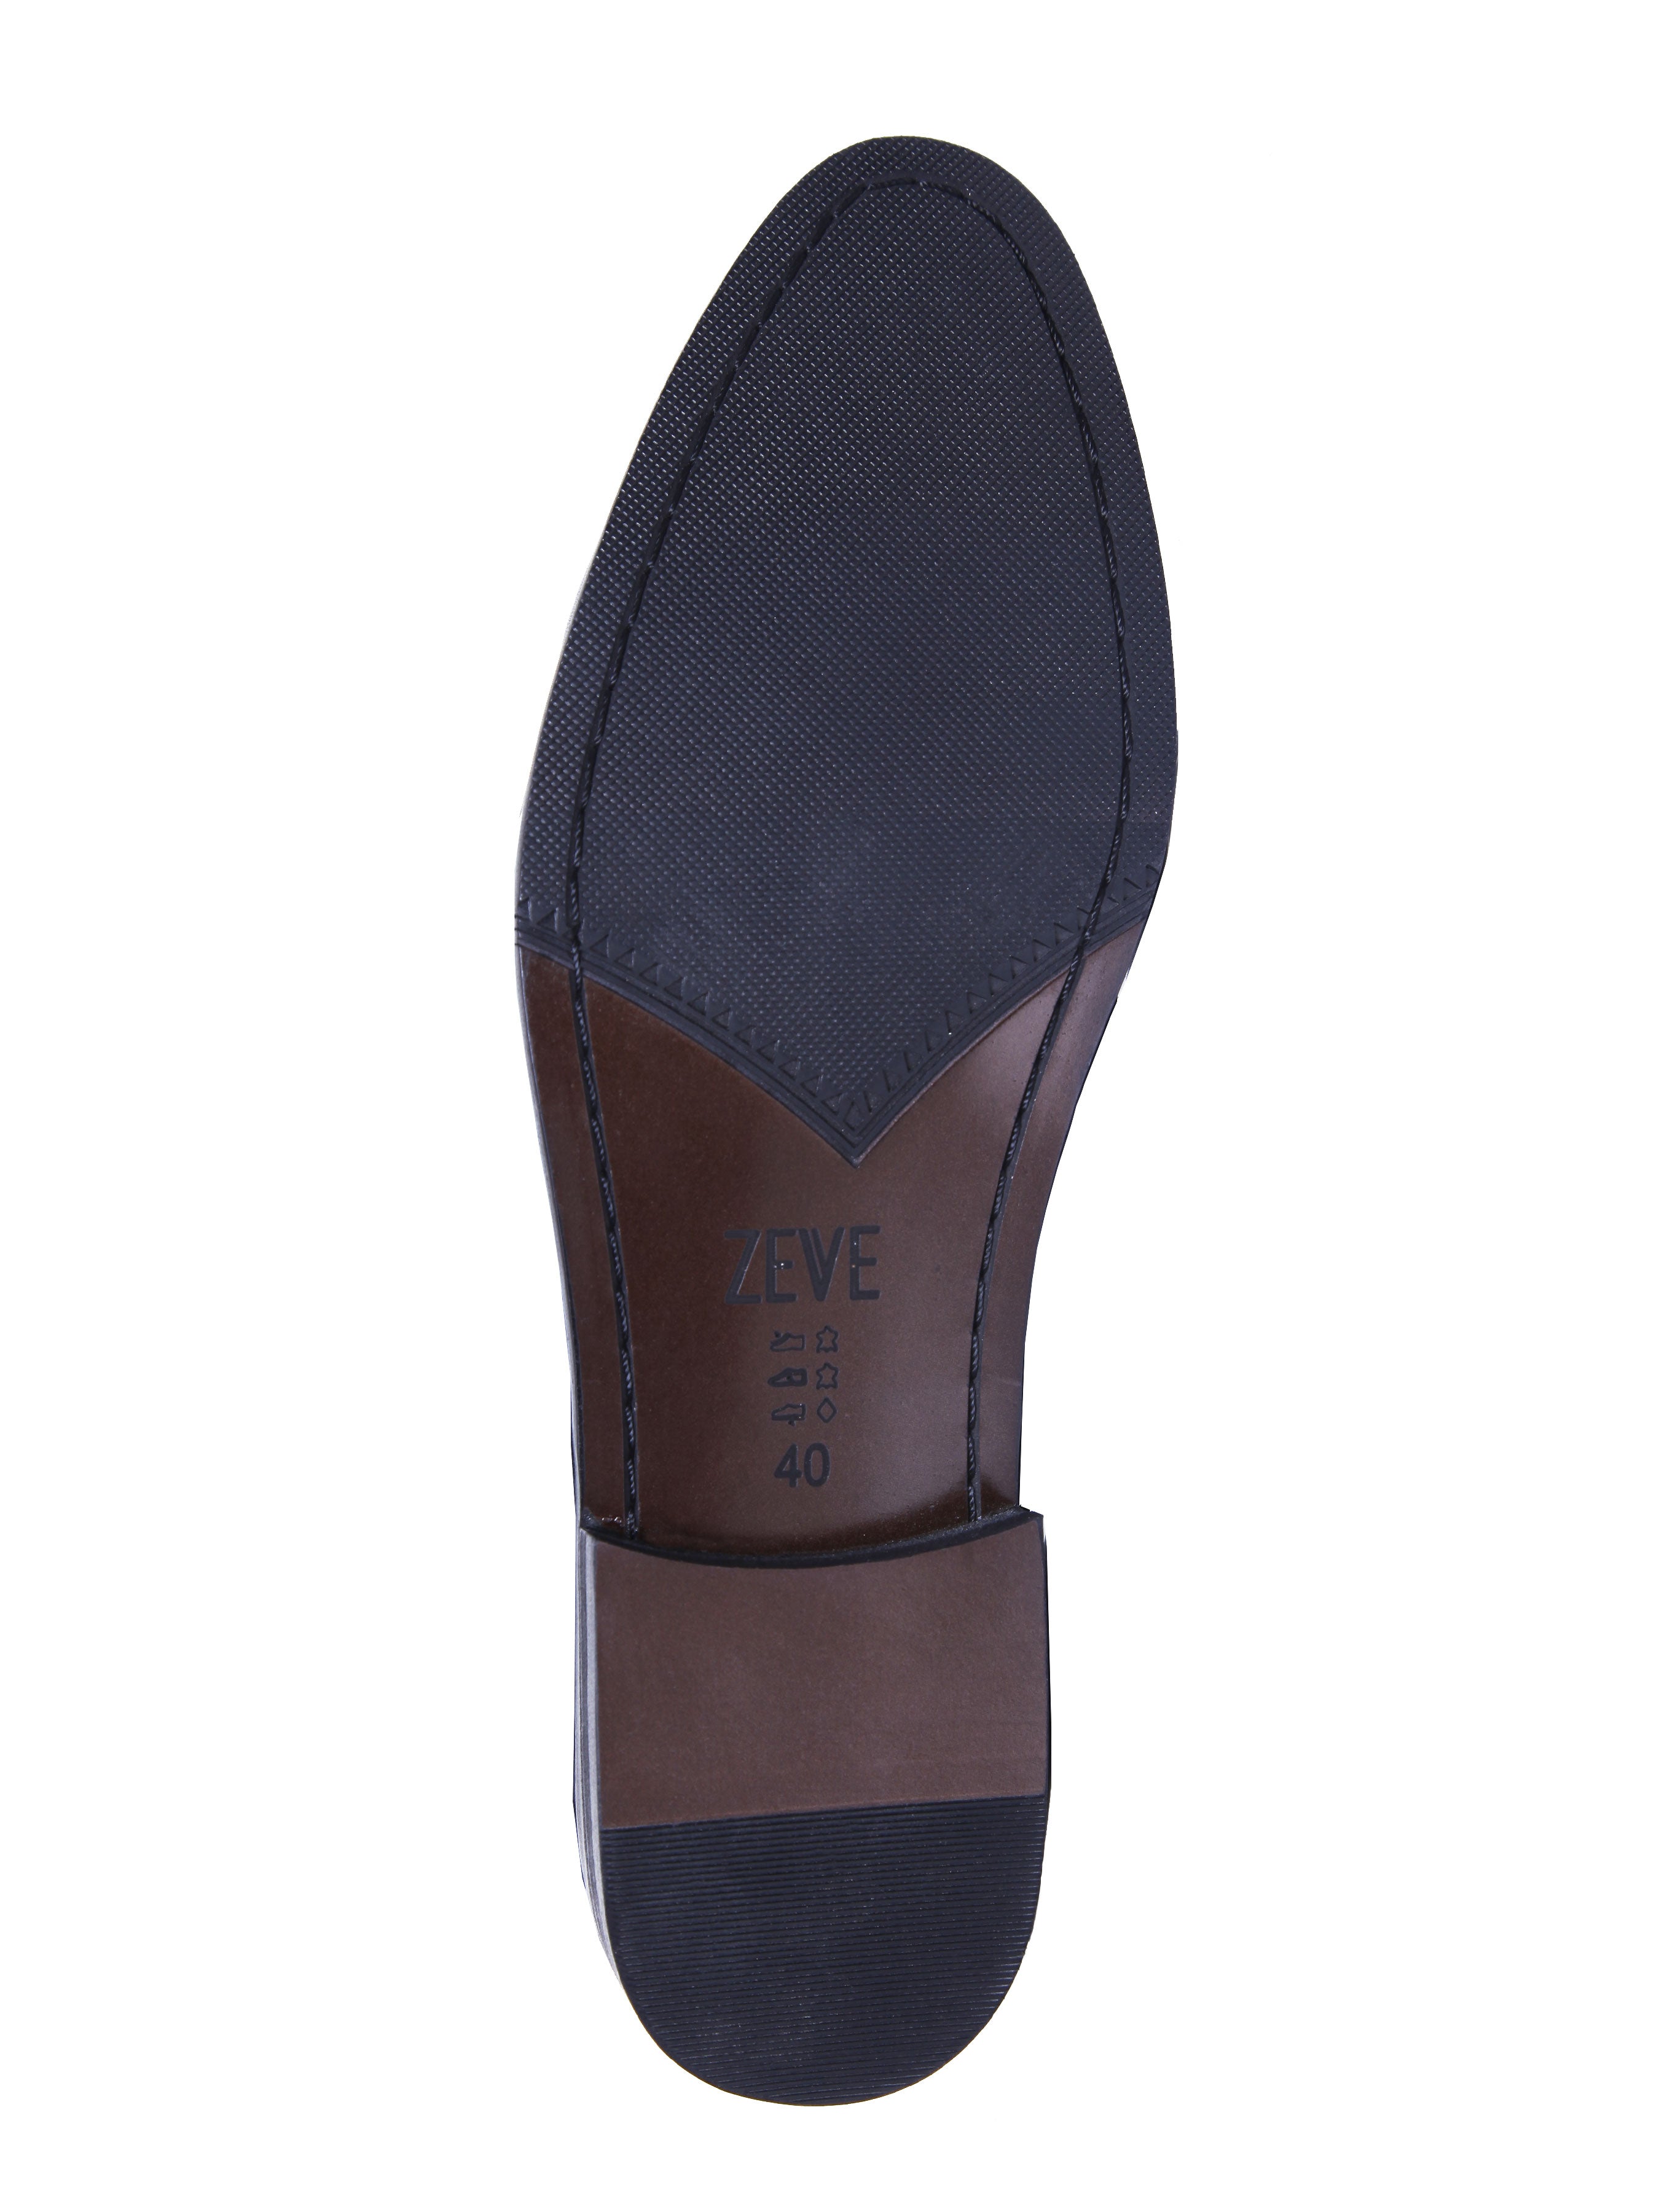 Loafer Slipper - Black Croco Leather - Zeve Shoes